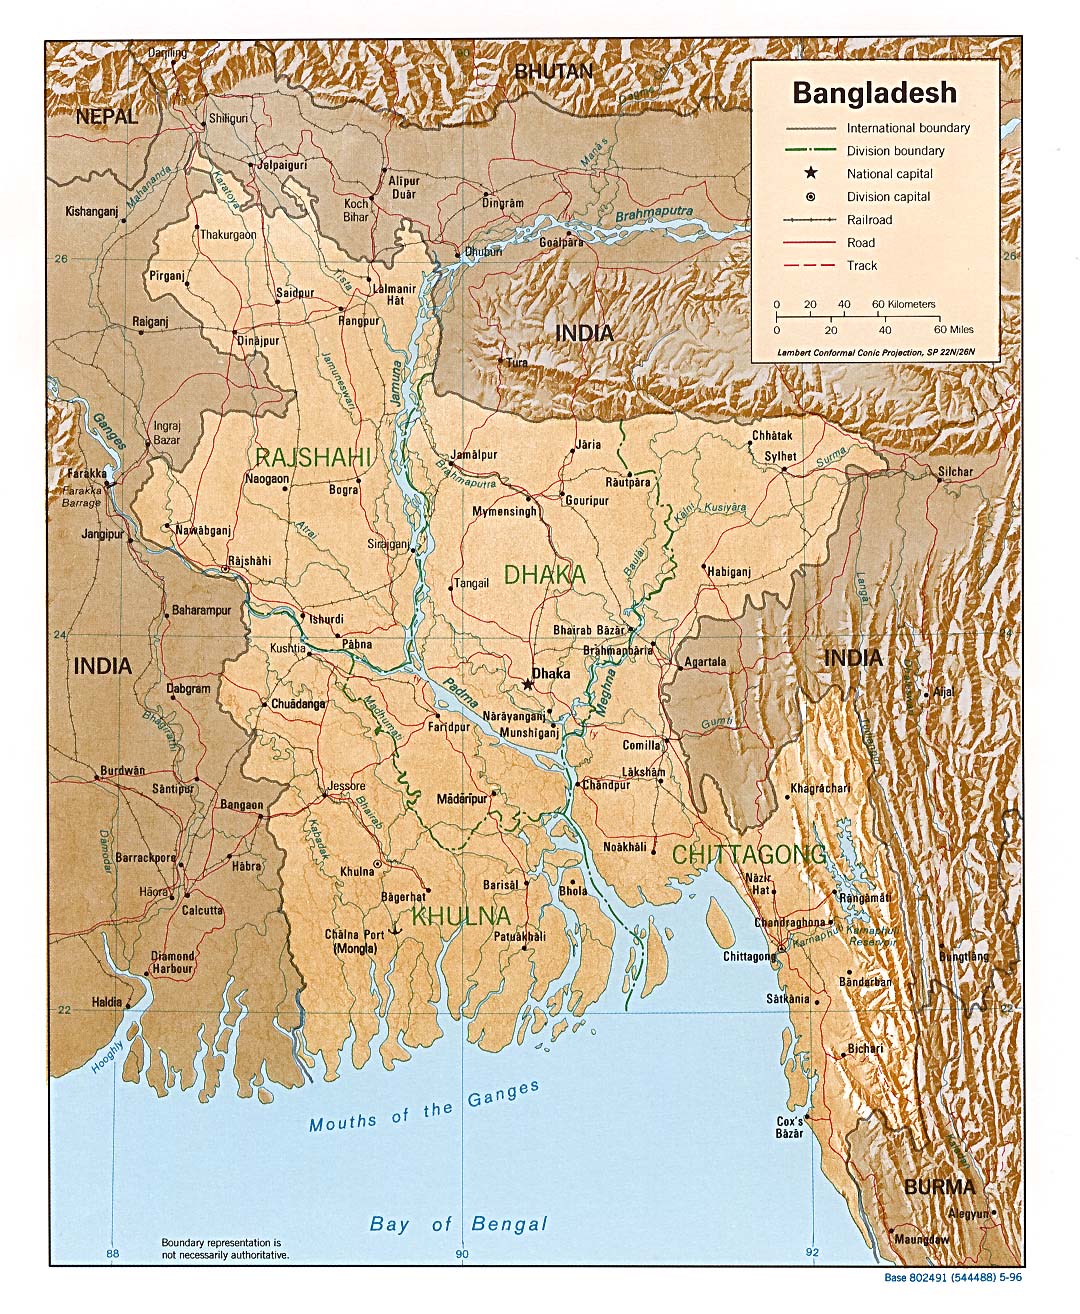 http://www.lib.utexas.edu/maps/middle_east_and_asia/bangladesh_rel96.jpg